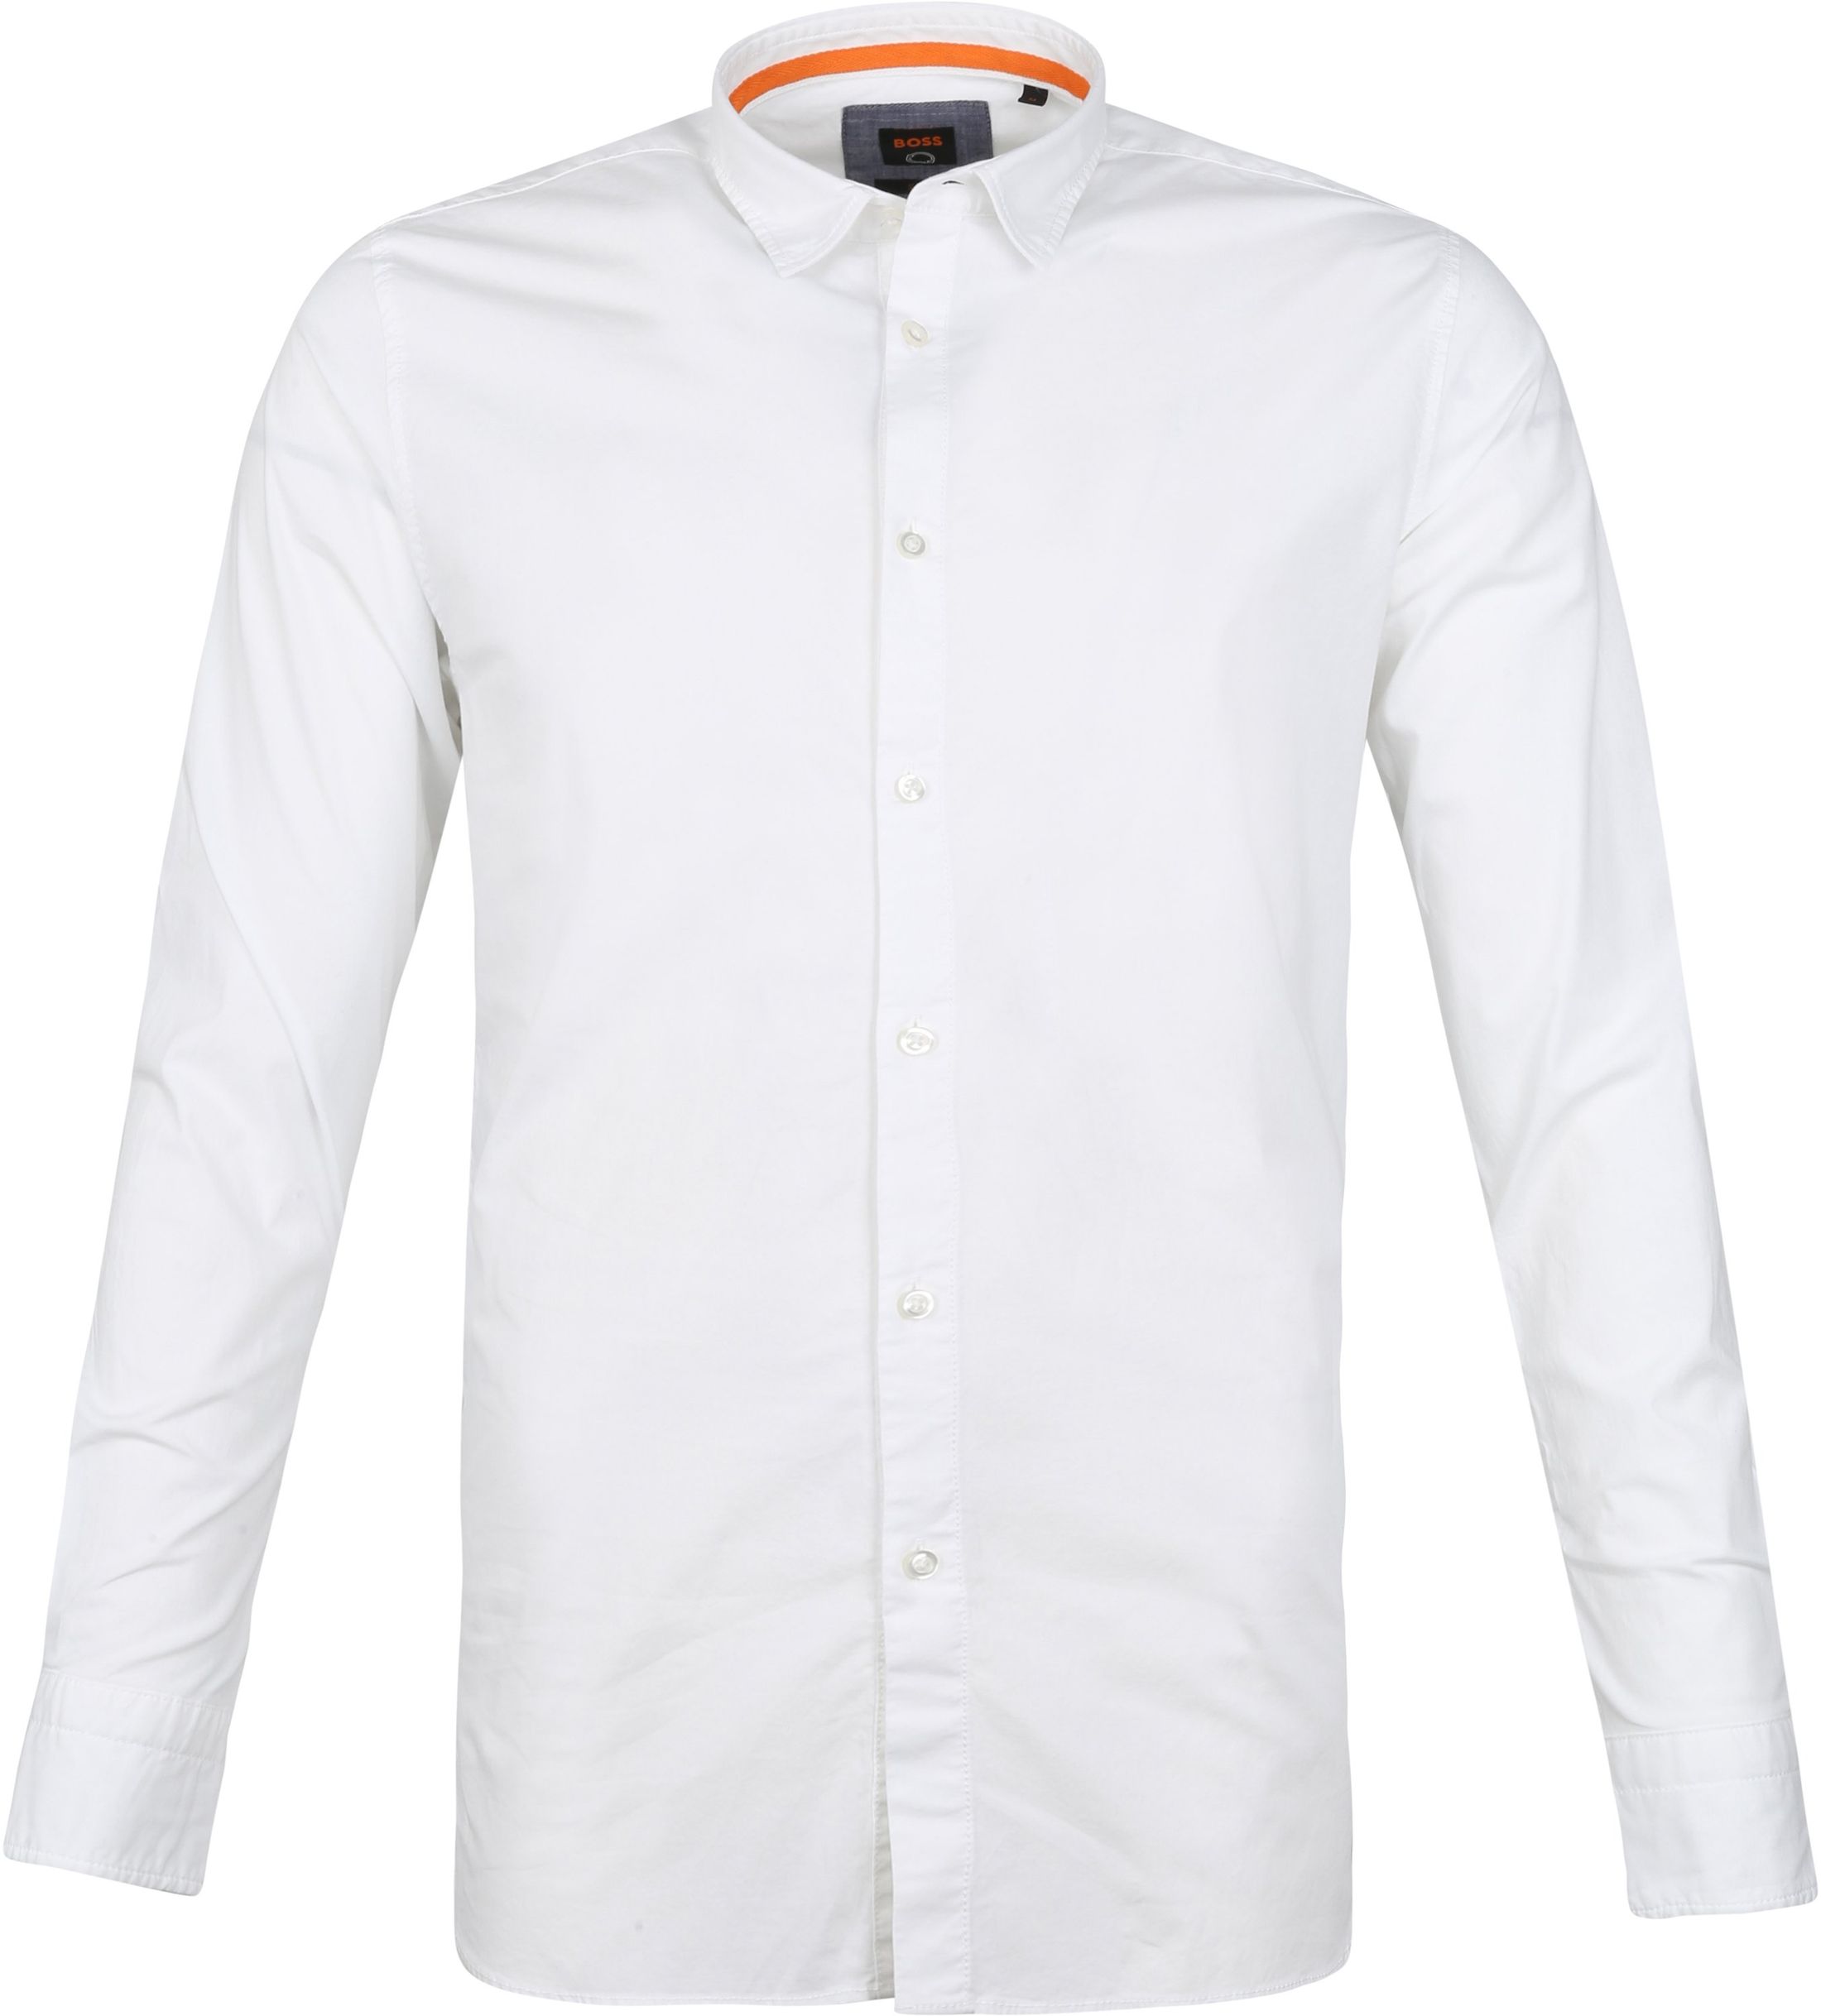 Hugo Boss Shirt White size XL